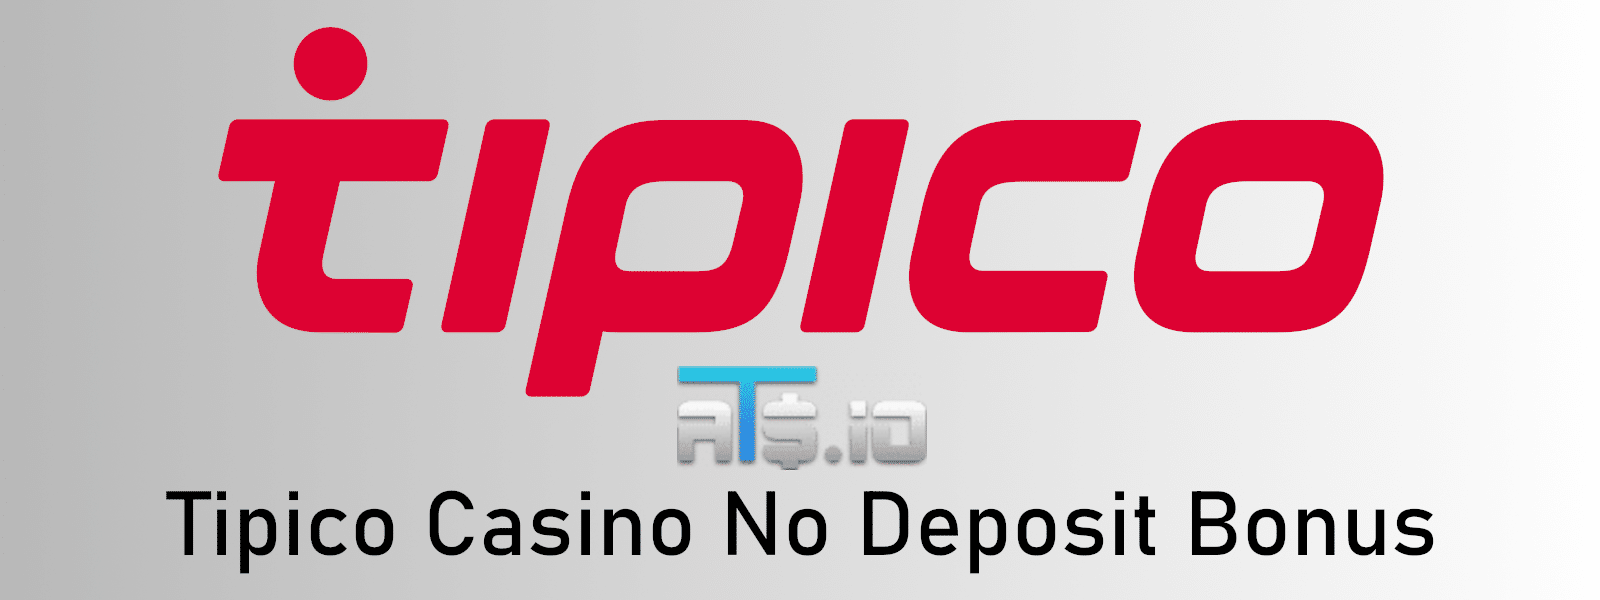 Tipico Casino No Deposit Bonus